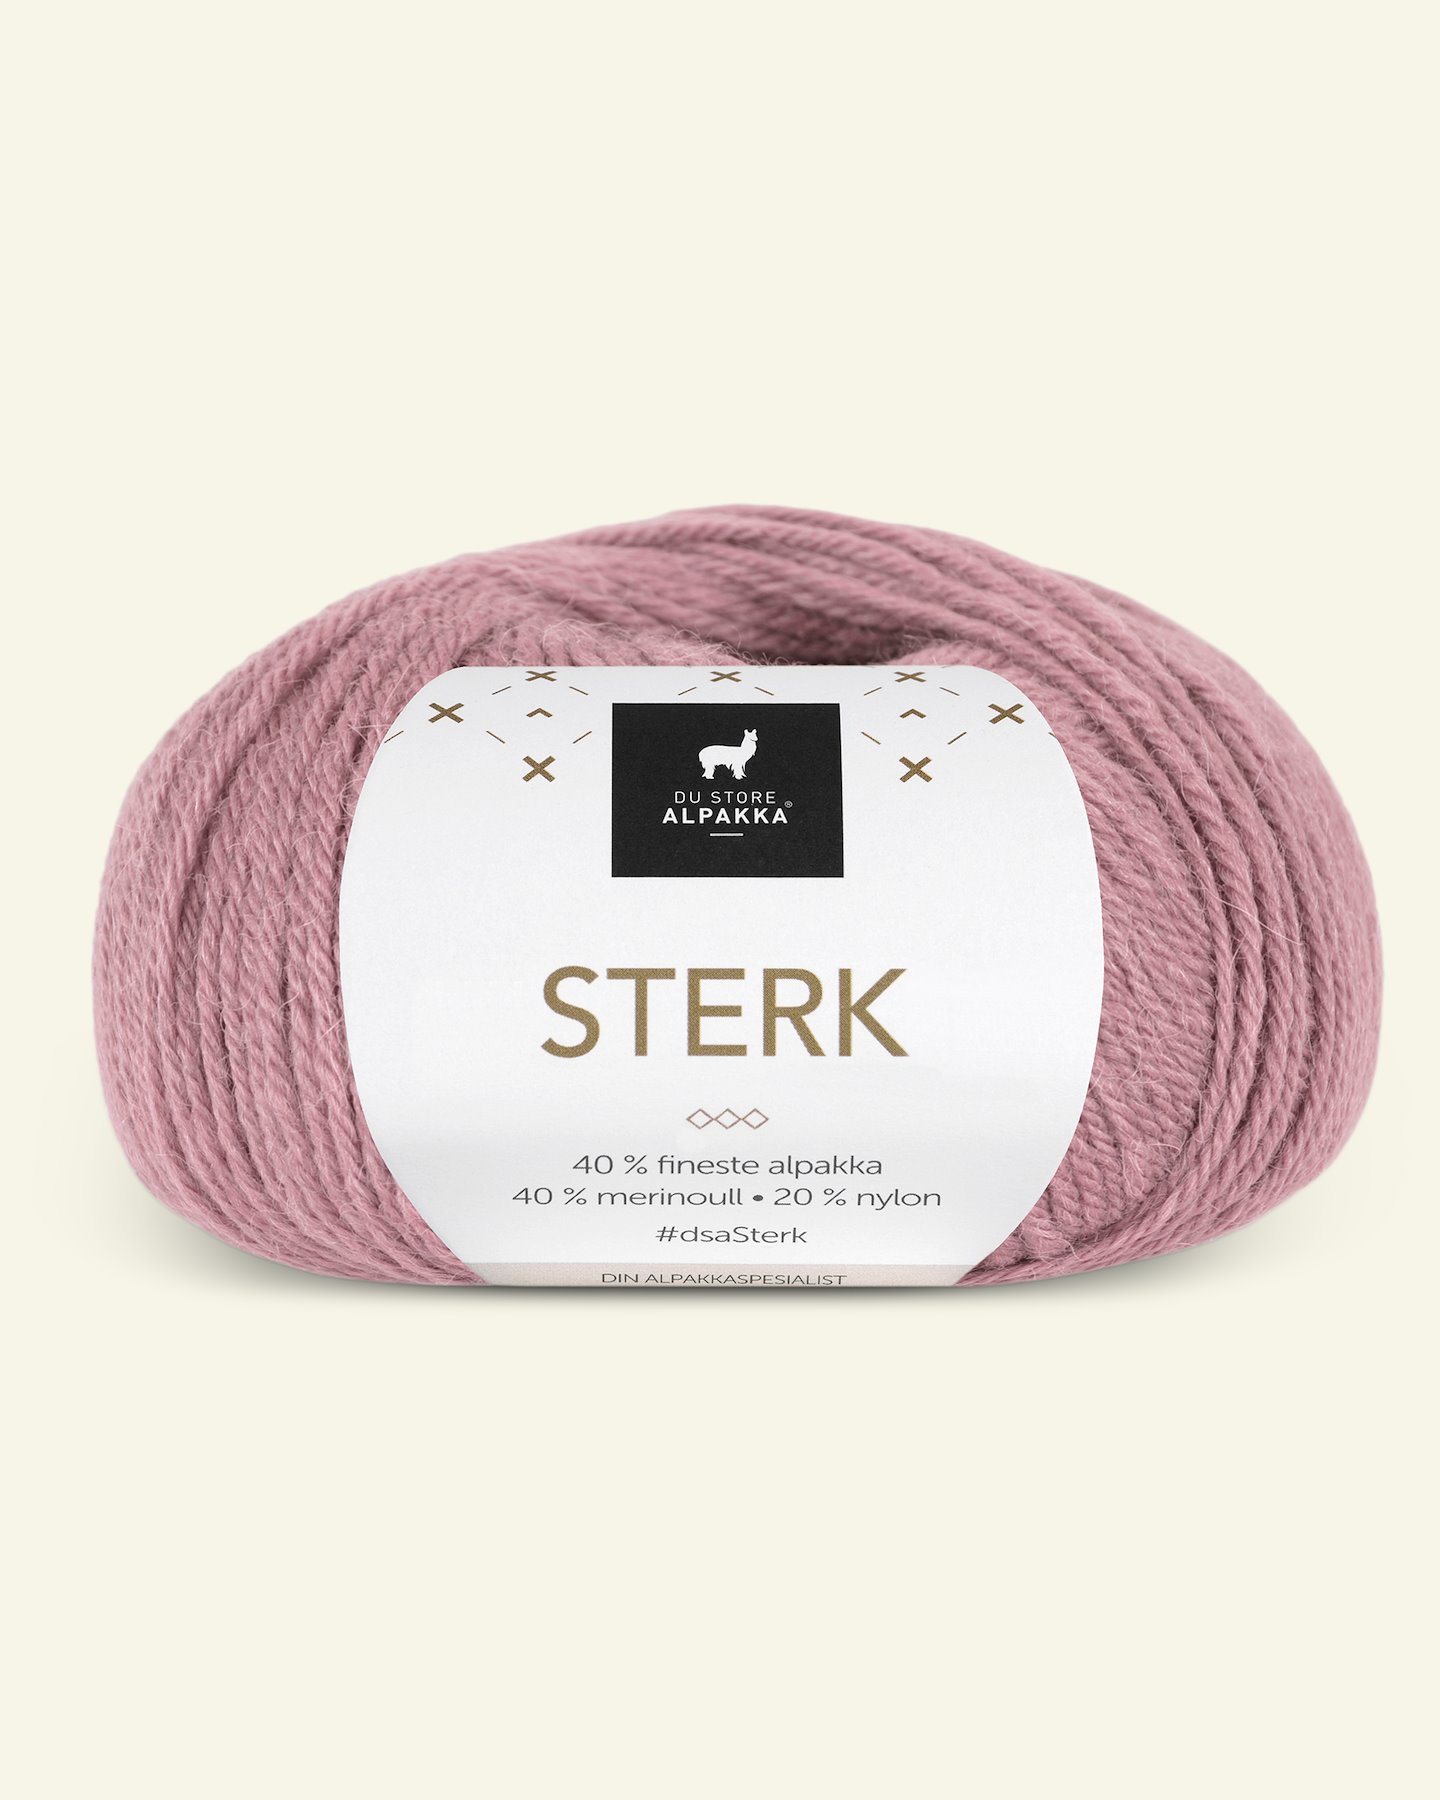 Du Store Alpakka, alpaca merino mixed yarn "Sterk", dark dusty rose (899) 90000693_pack